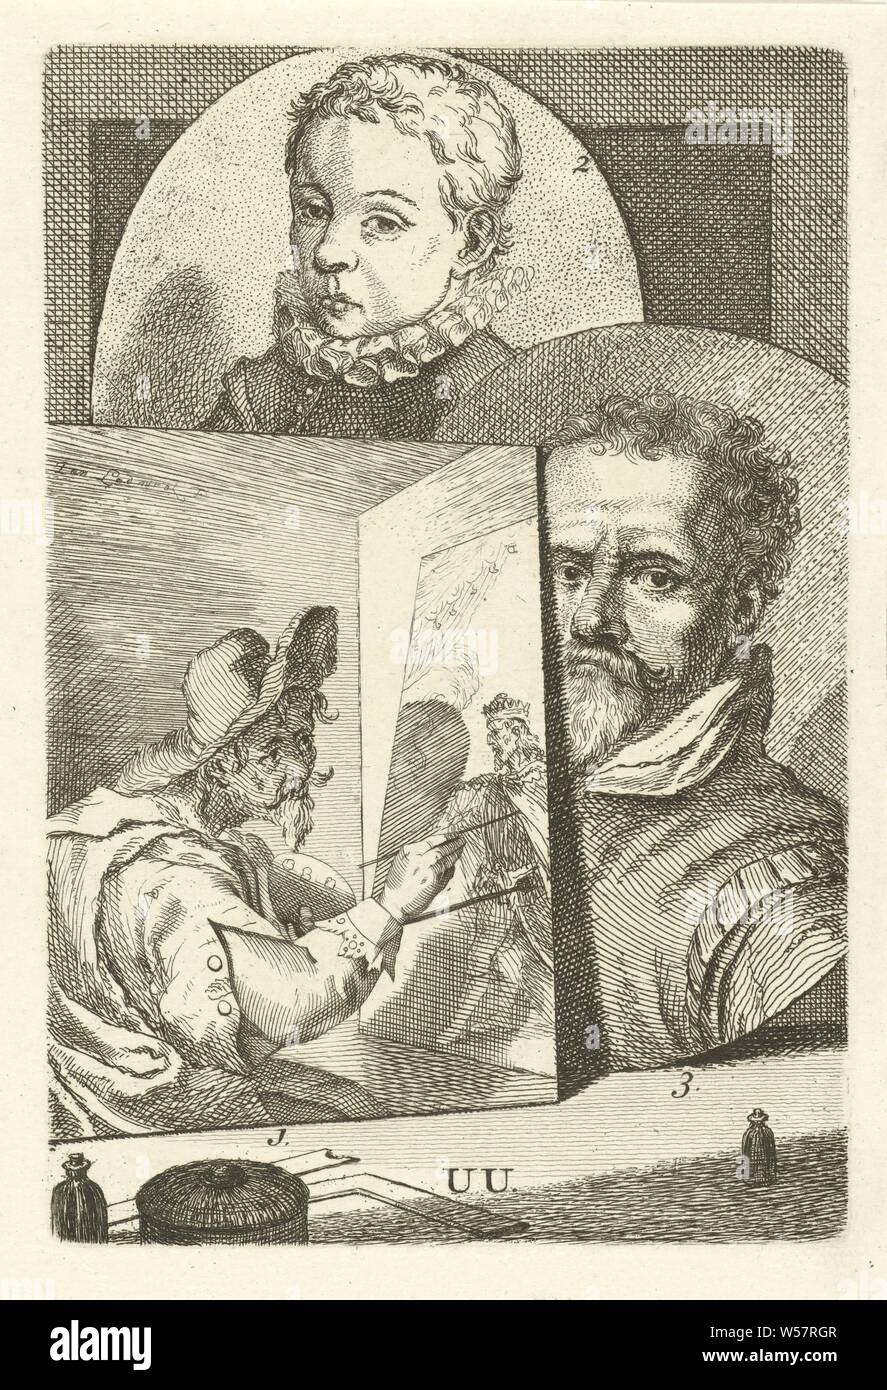 Portraits of Joachim Wtewael, Zacharias Dolendo and Hendrik de Keyser I, Three numbered artist's portraits. Portrait of Joachim Wtewael (no. 1), Zacharias Dolendo (no. 2) and Hendrik de Keyser I (no. 3). Print marked lower center: UU, Joachim Wtewael, Zacharias Dolendo, Hendrik de Keyser (I), Jan l'Admiral (mentioned on object), 1764, paper, etching, h 154 mm × w 104 mm Stock Photo